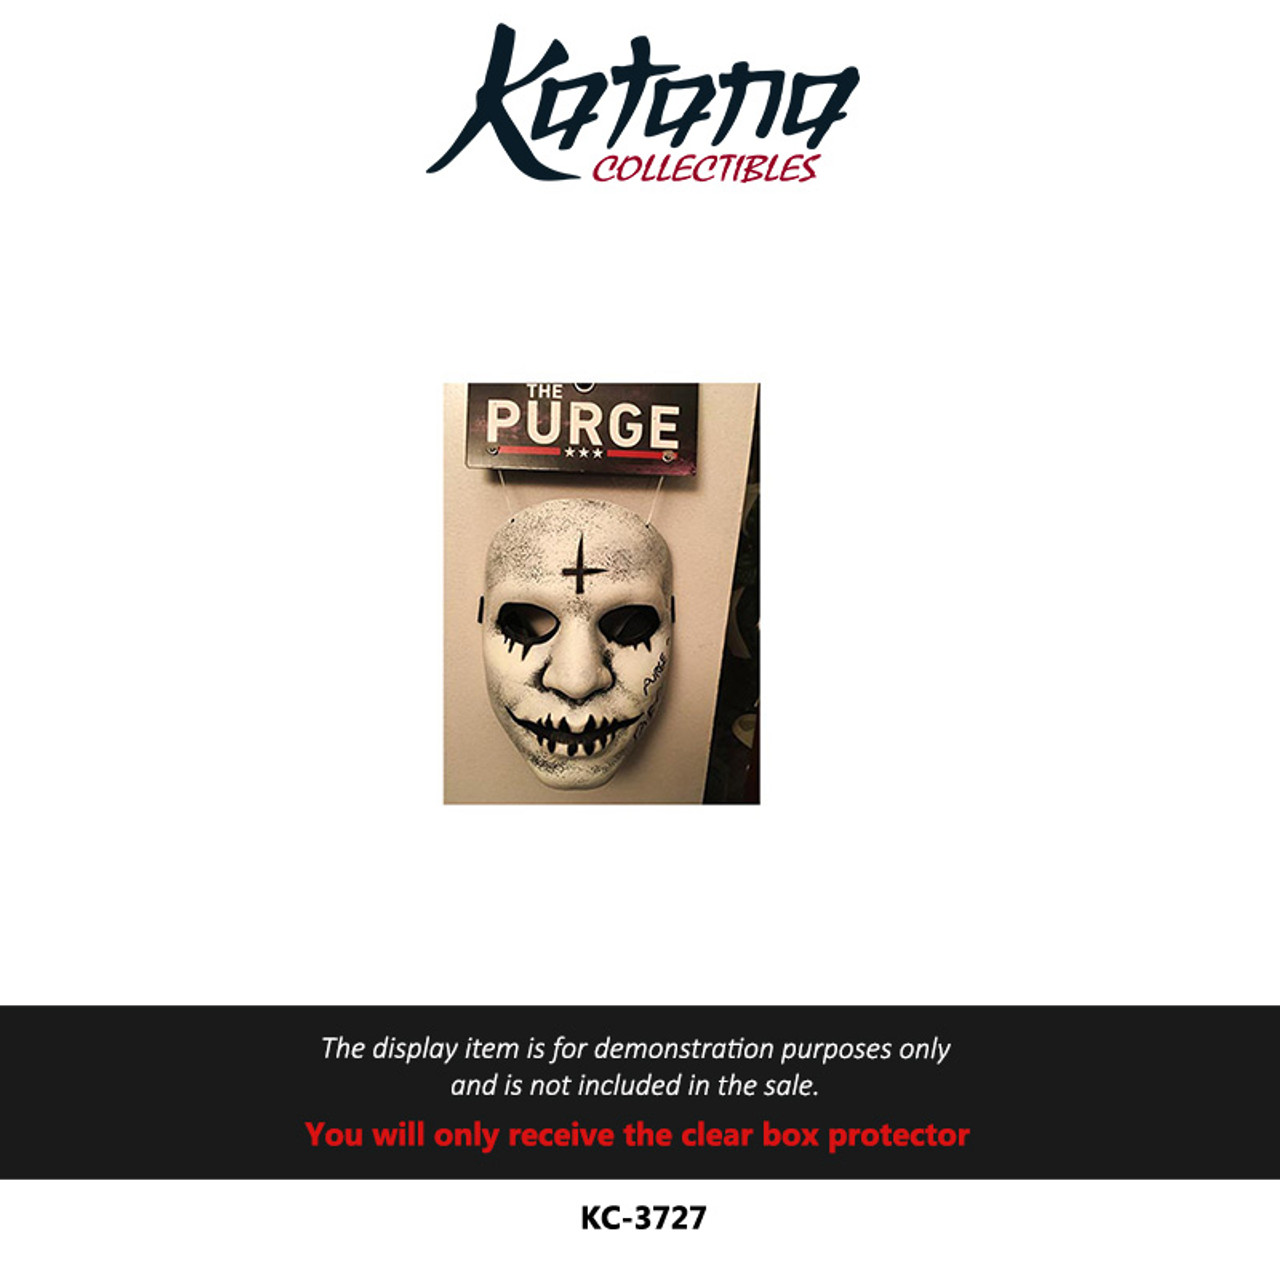 Katana Collectibles Protector For Purge Mask